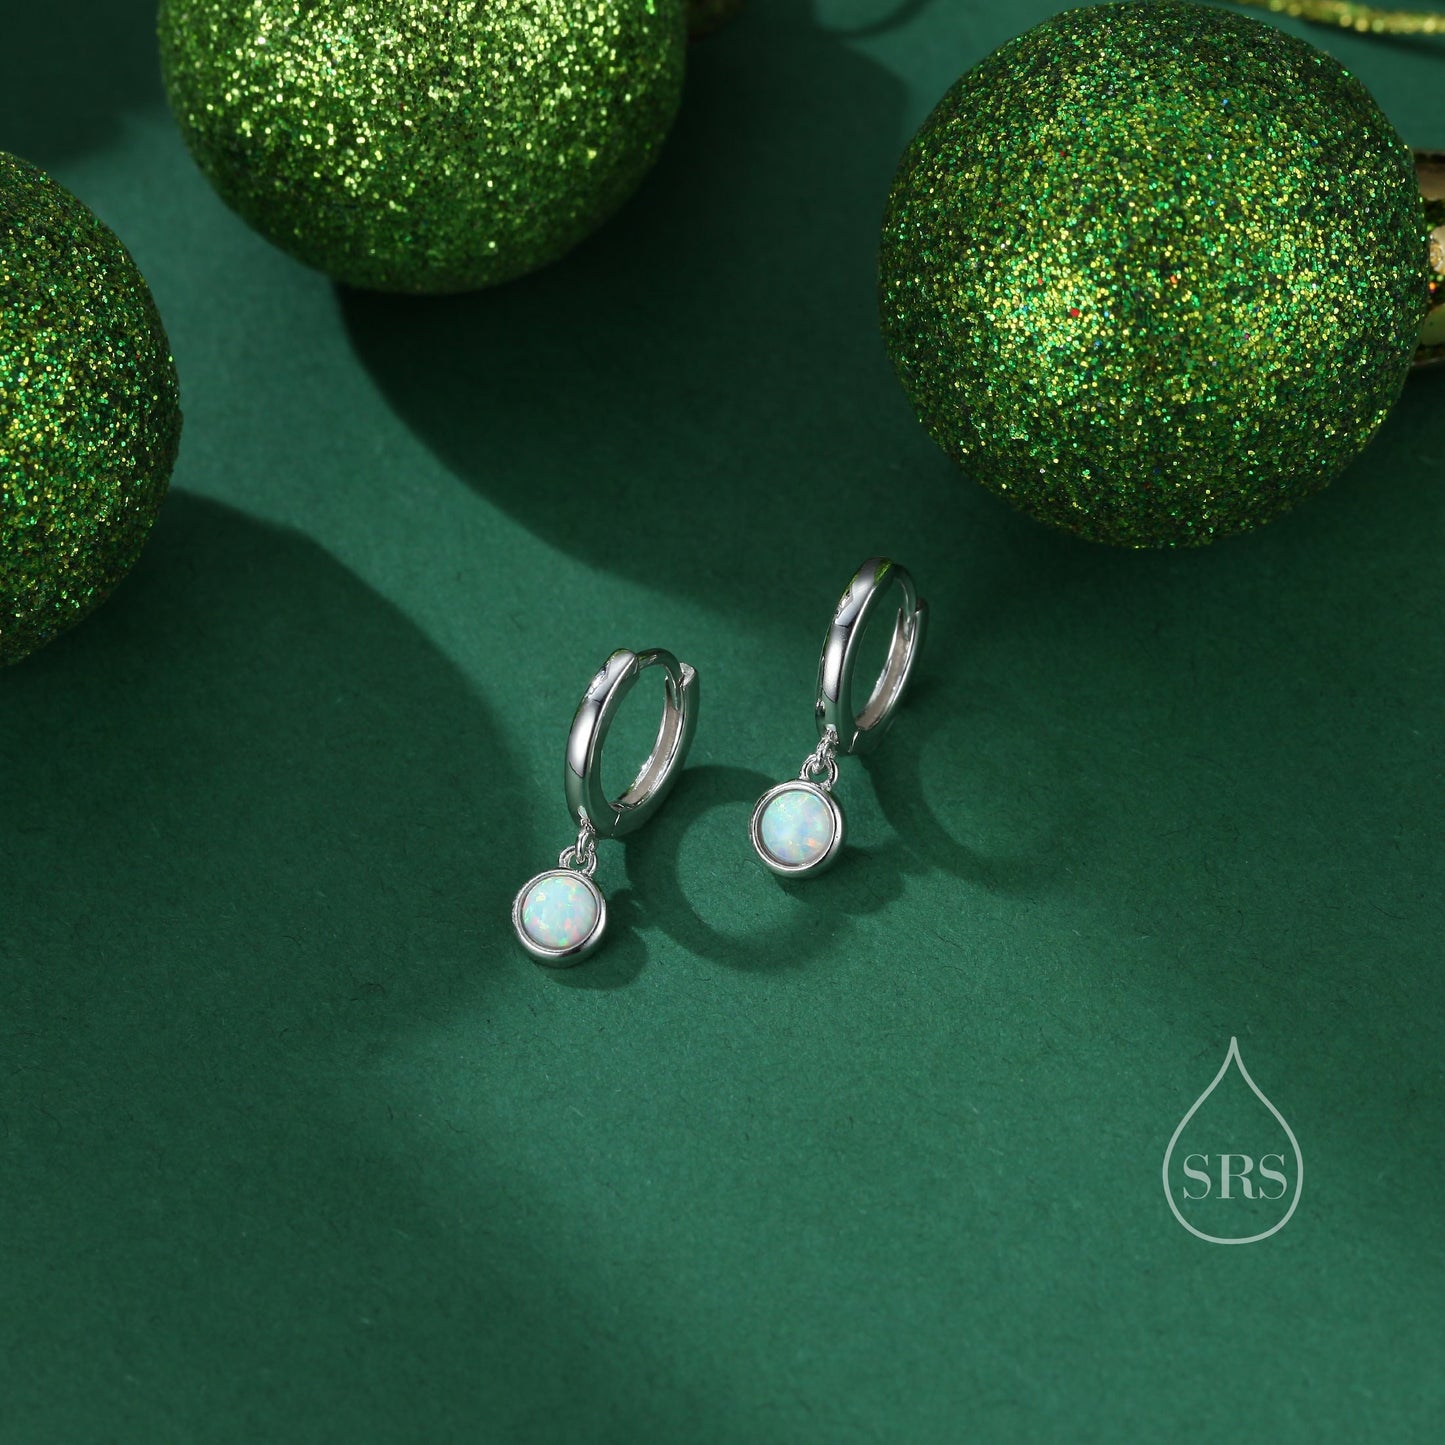 Sterling Silver Dangling 4mm Opal Hoop Earrings, Blue Opal or Fire Opal Charm Dangle Hoop Earrings, Silver or Gold